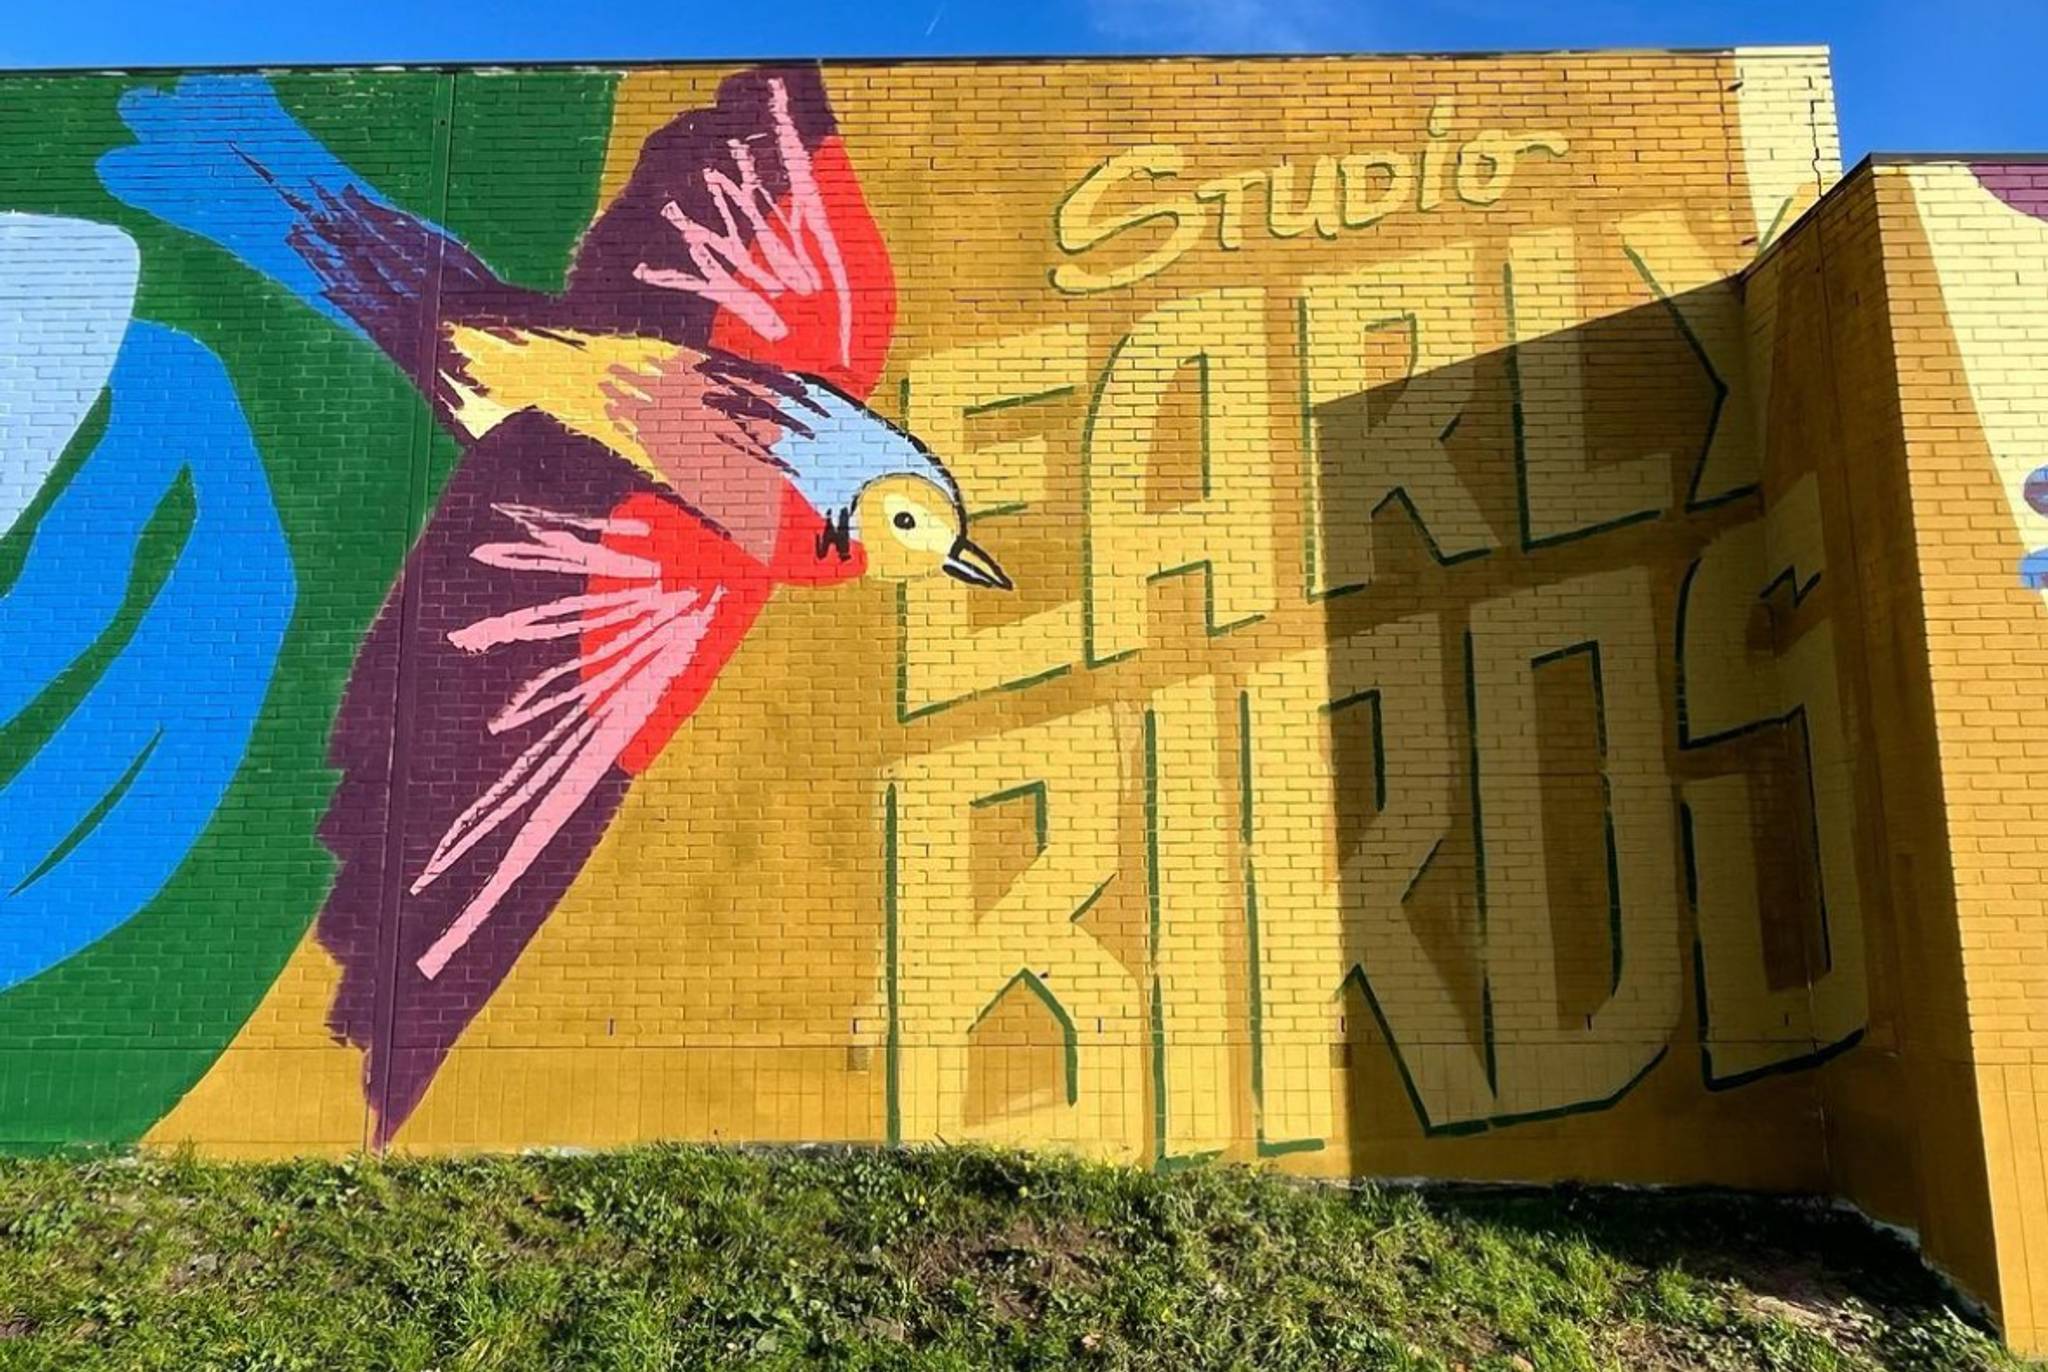 Studio Early Birds&mdash;Hou vol! (Hold on!)